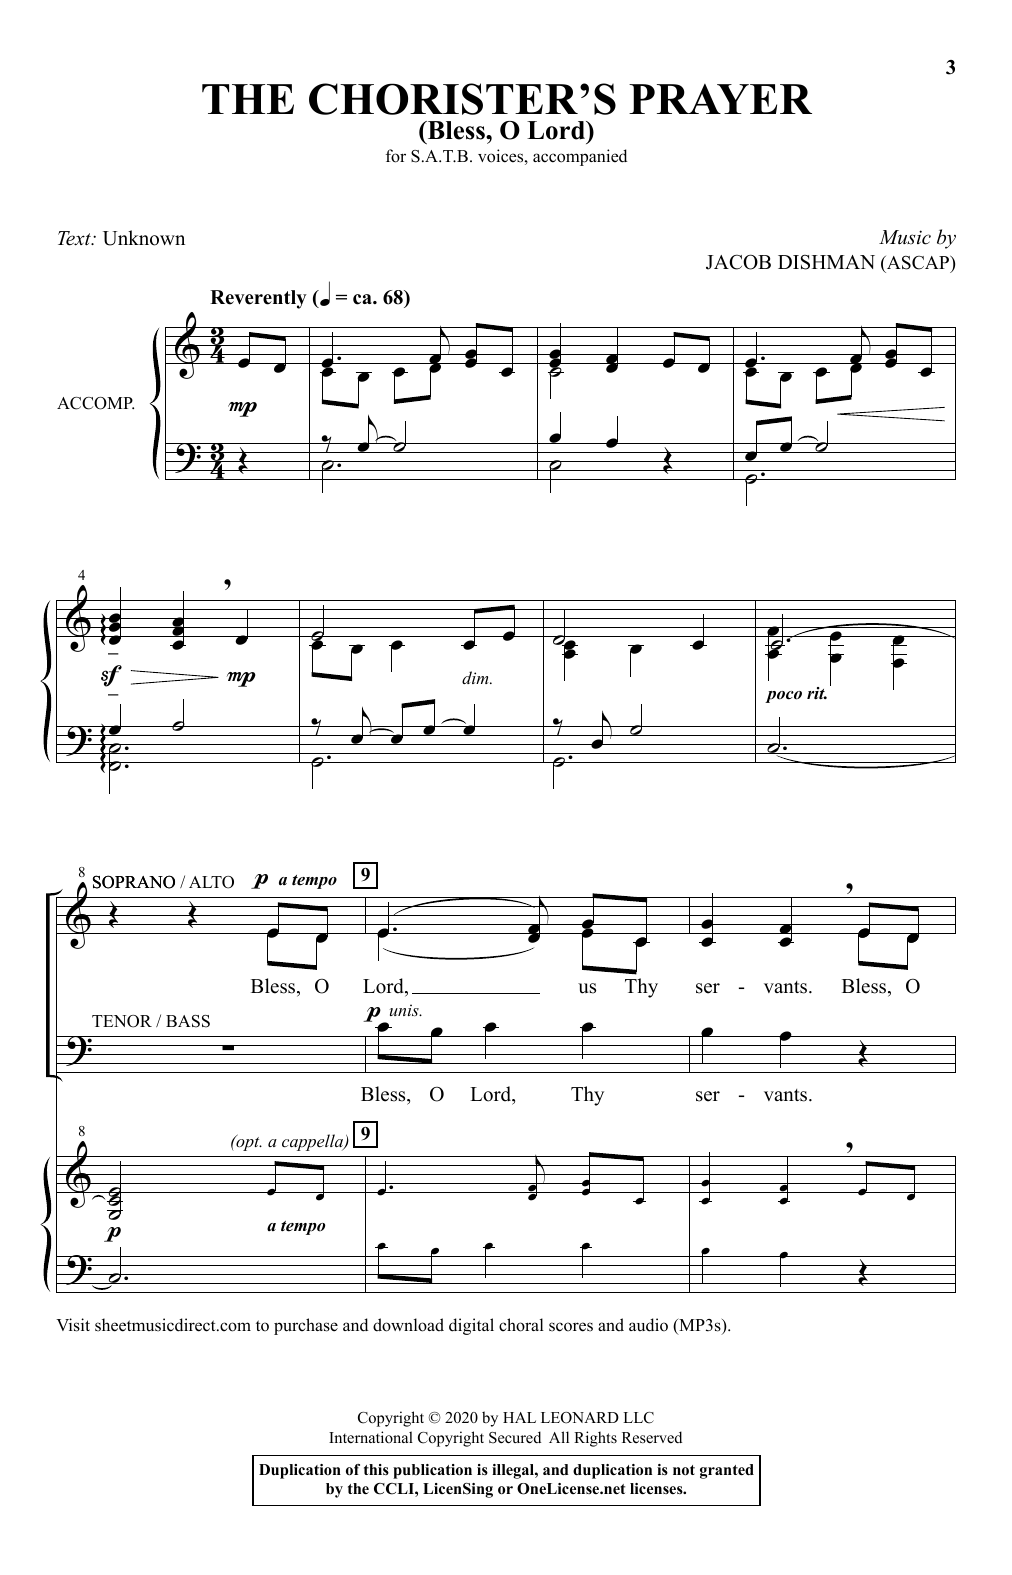 Download Jacob Dishman The Chorister's Prayer (Bless, O Lord) Sheet Music